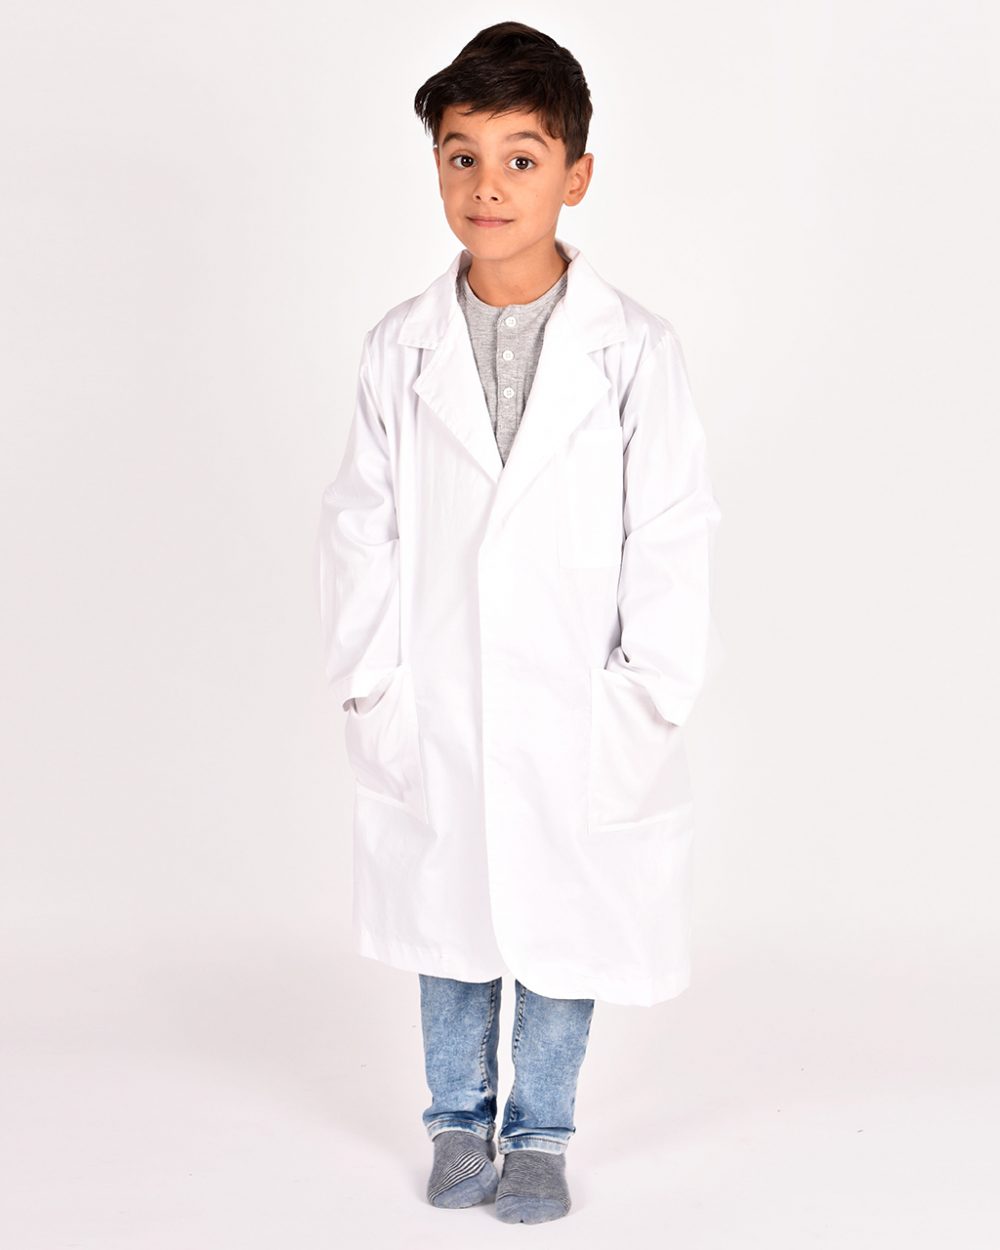 pojke i vit labbrock/doktorsrock med händerna i fickorna